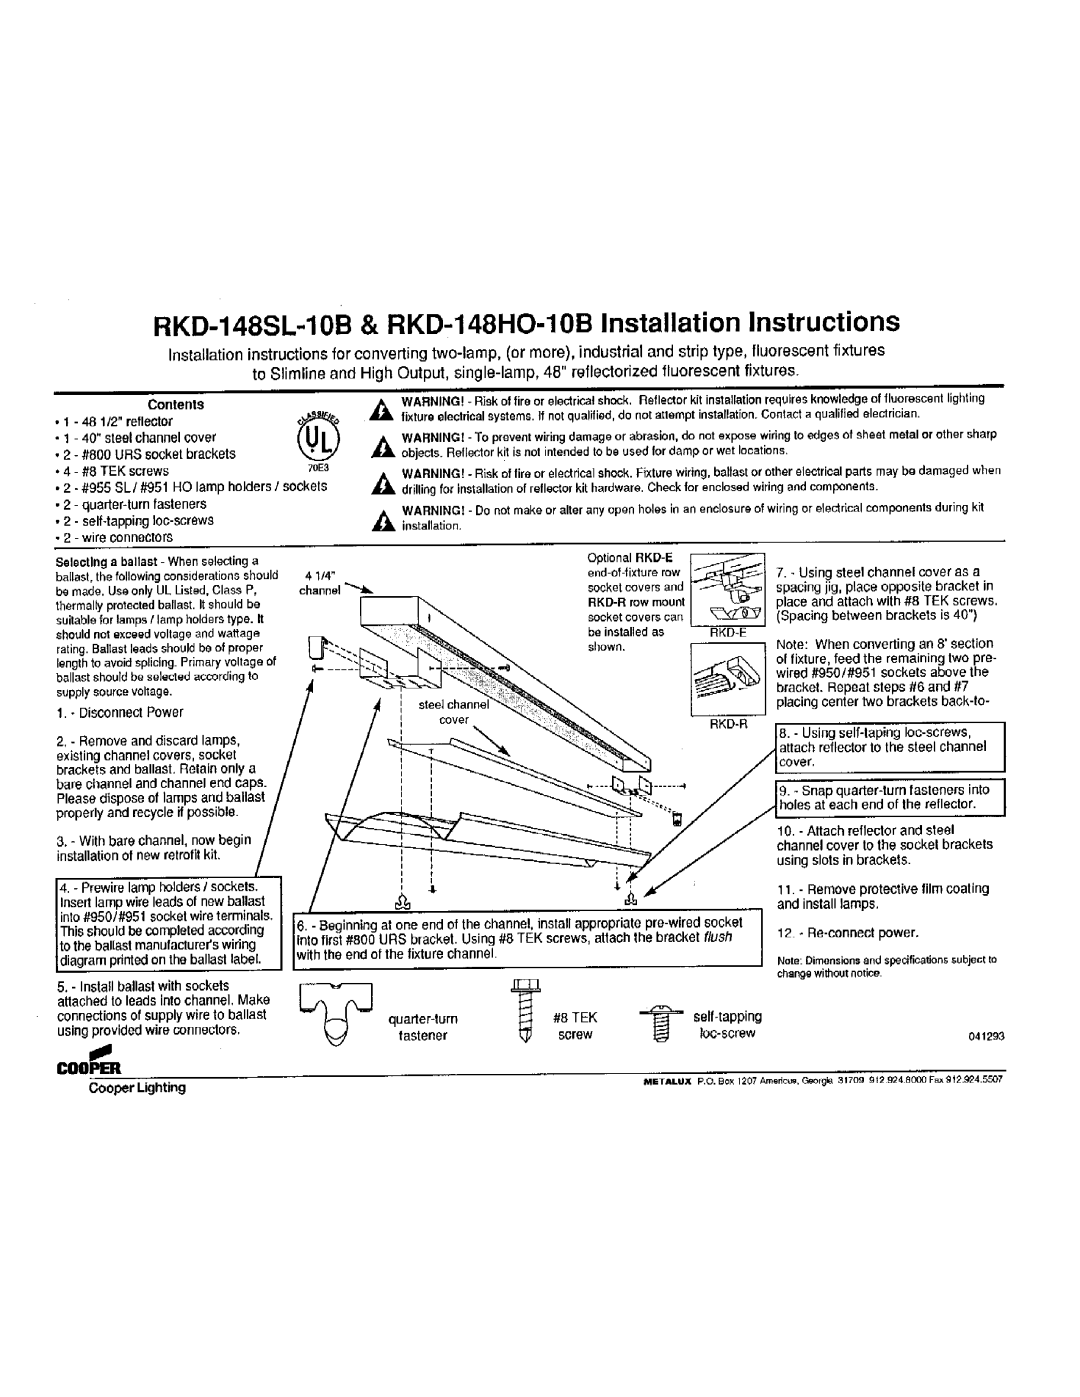 Cooper Lighting RKD-148SL-10B manual 